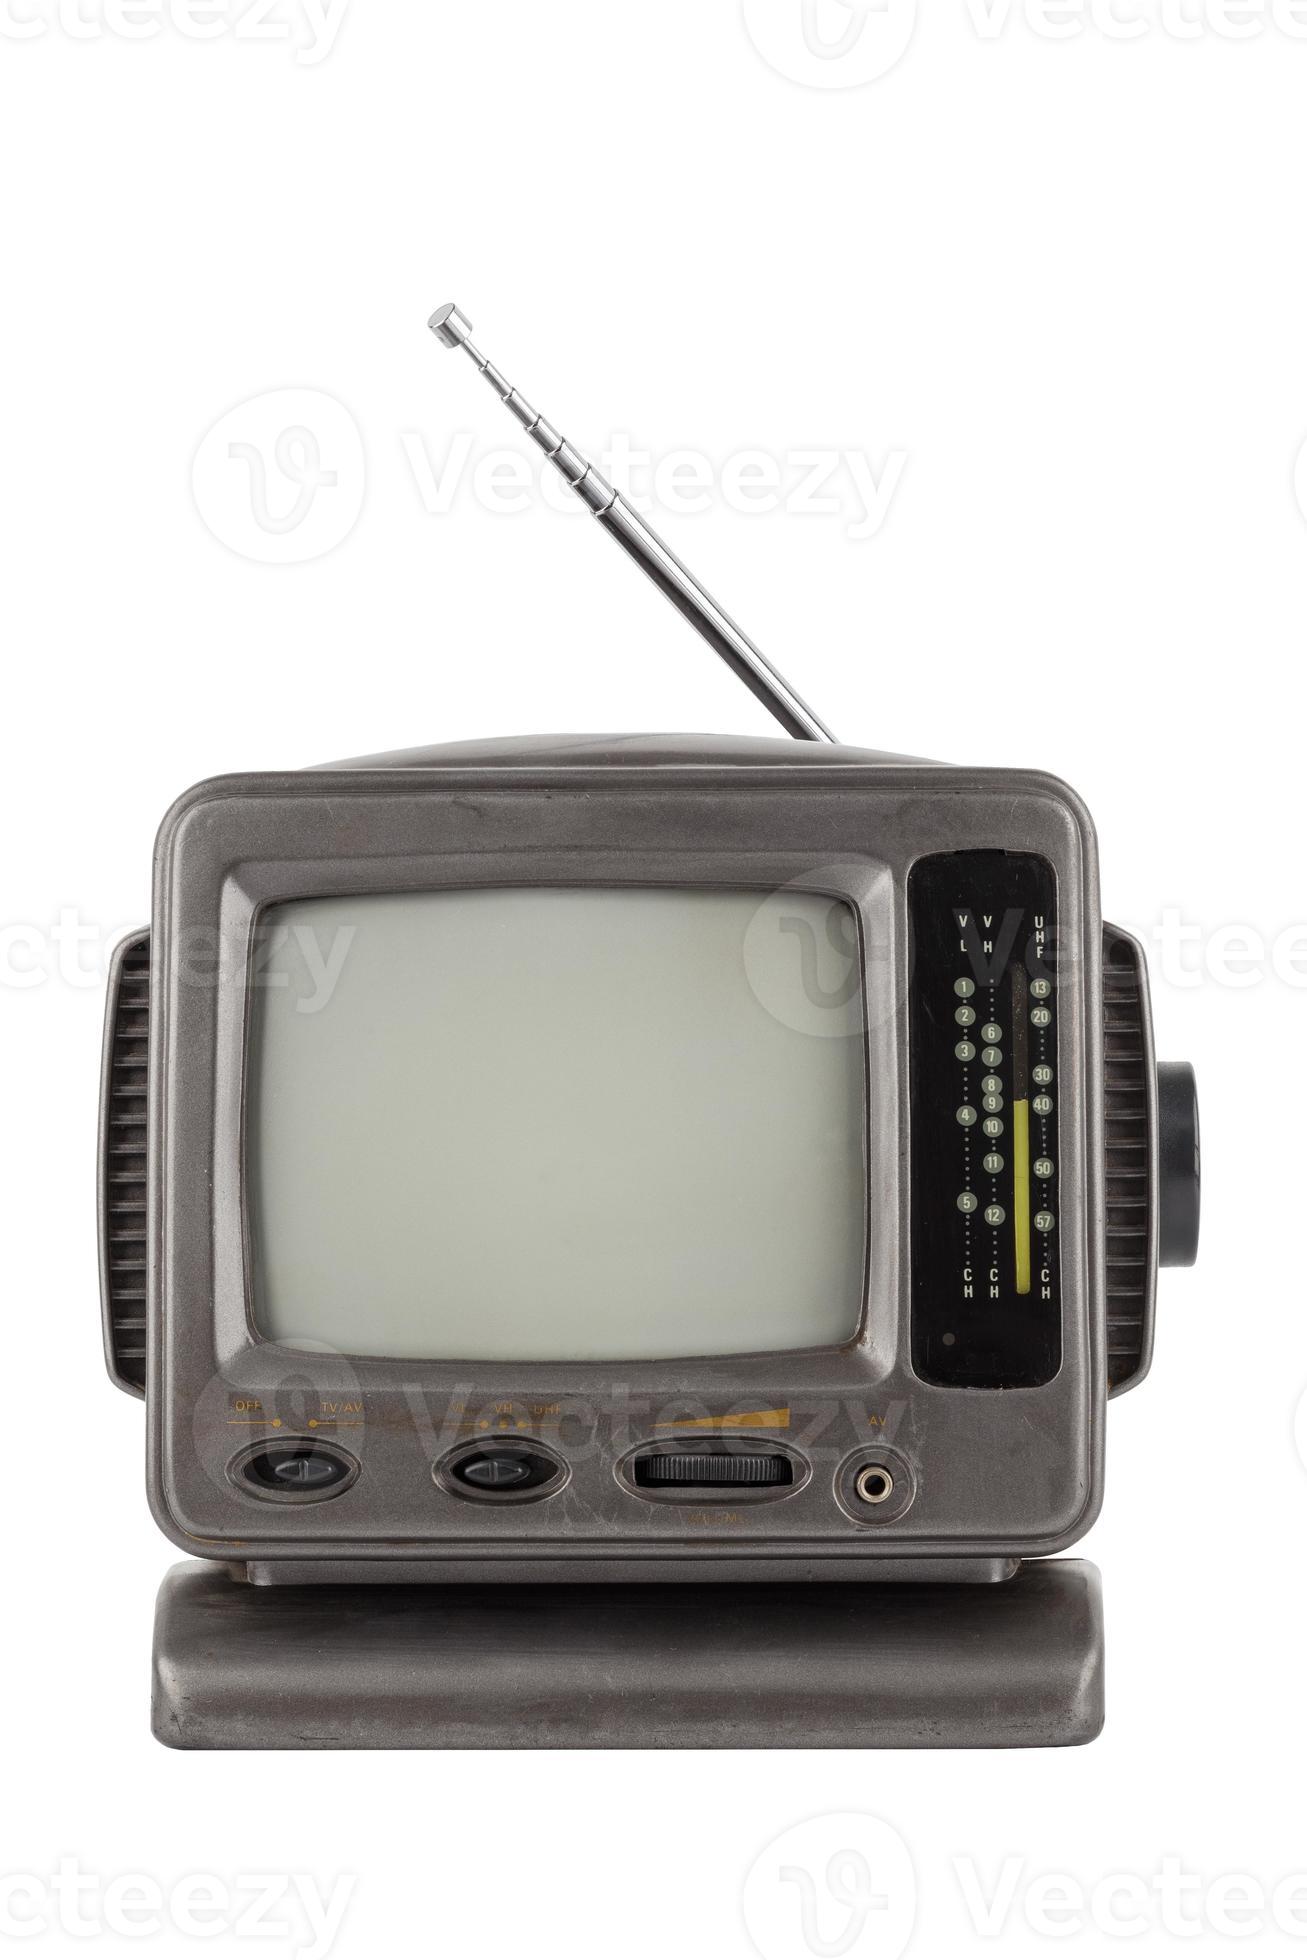 antigua unidad de tv crt analógica portátil de 5,5 pulgadas